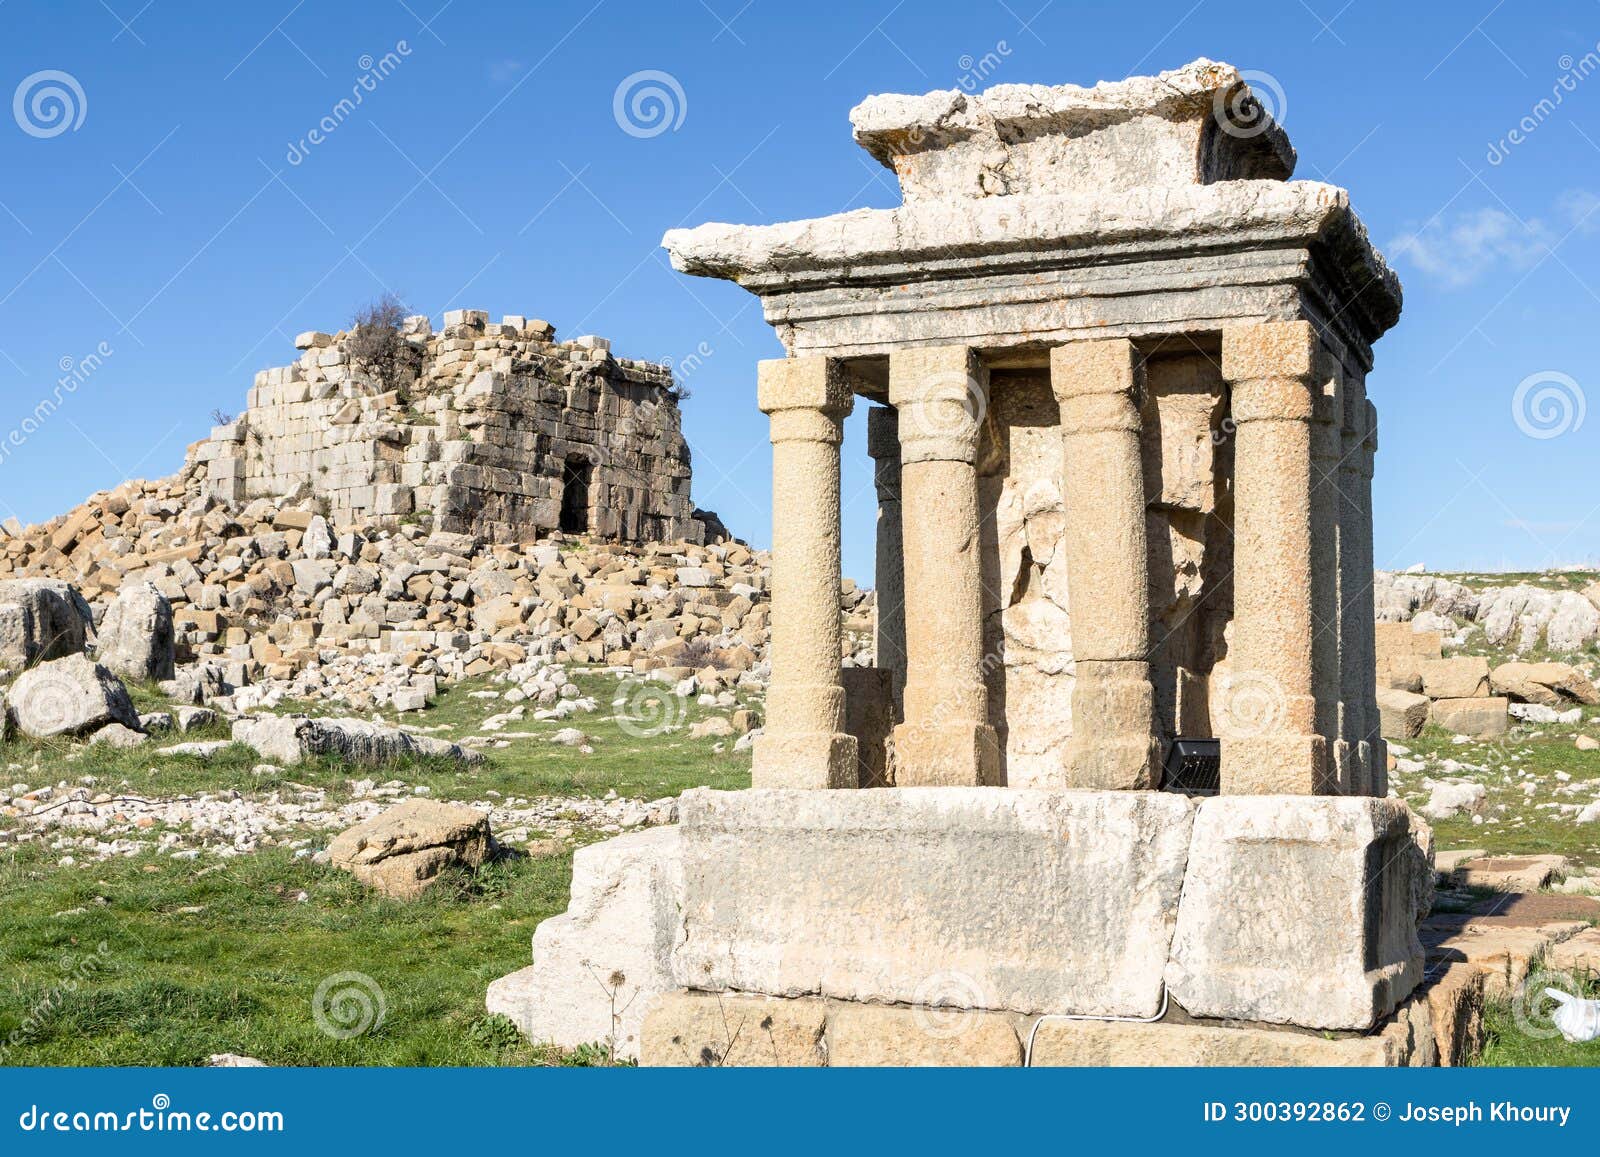 the small altar and tower of claudius, roman ruins, faqra, lebanon